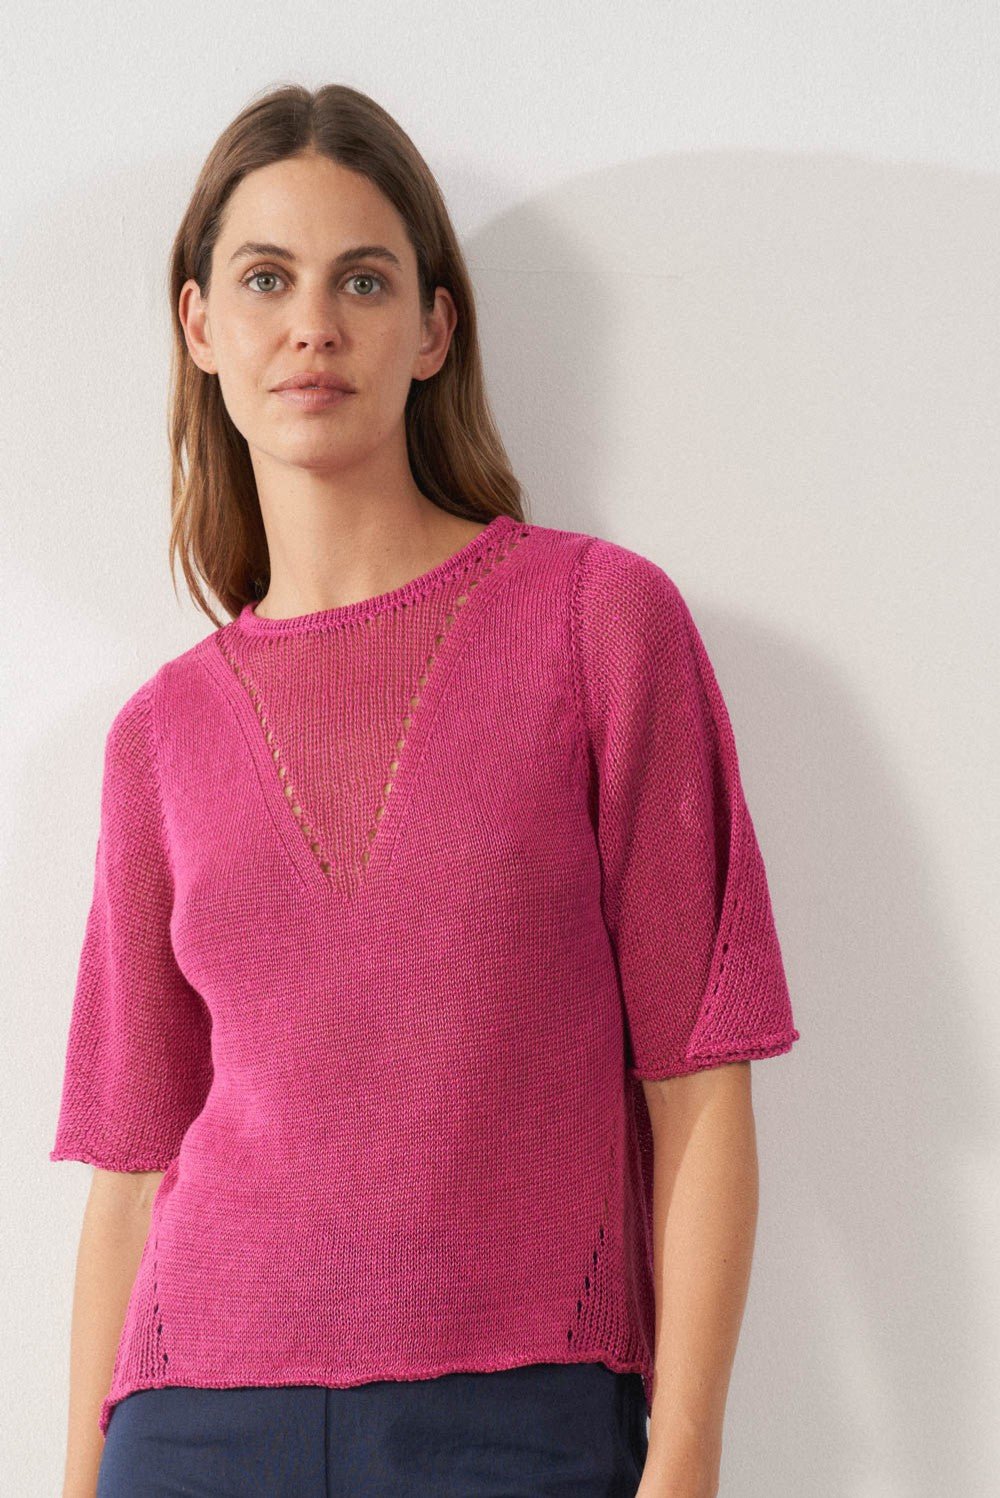 Sita Murt - Flared S/S Sweater: Magenta - Shorely Chic Boutique